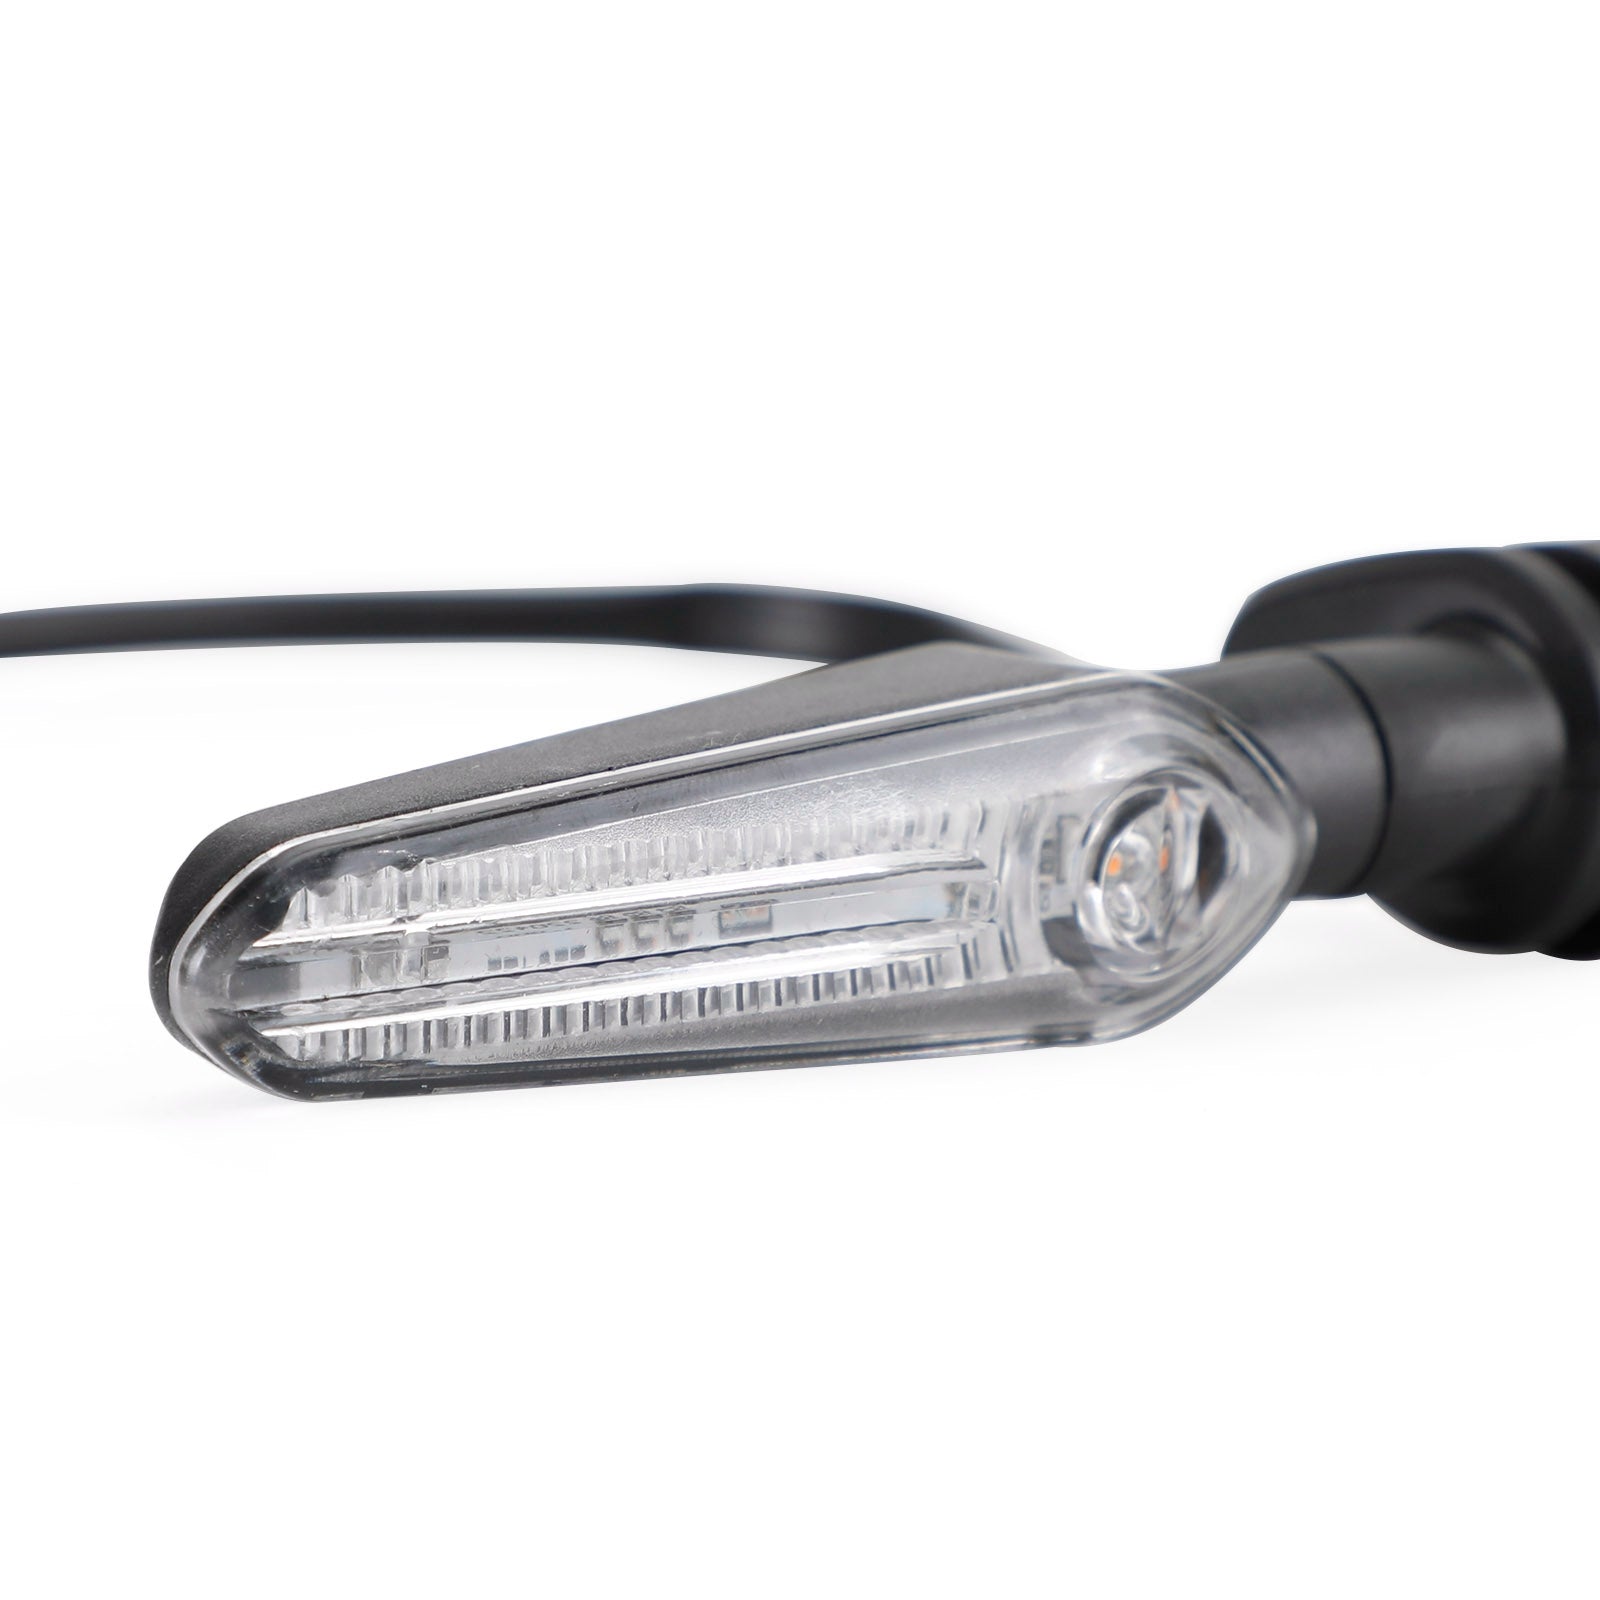 LED Brechung Blinker Blinker Licht Für Yamaha MT-25 MT-03 MT-07 MT-09 T7